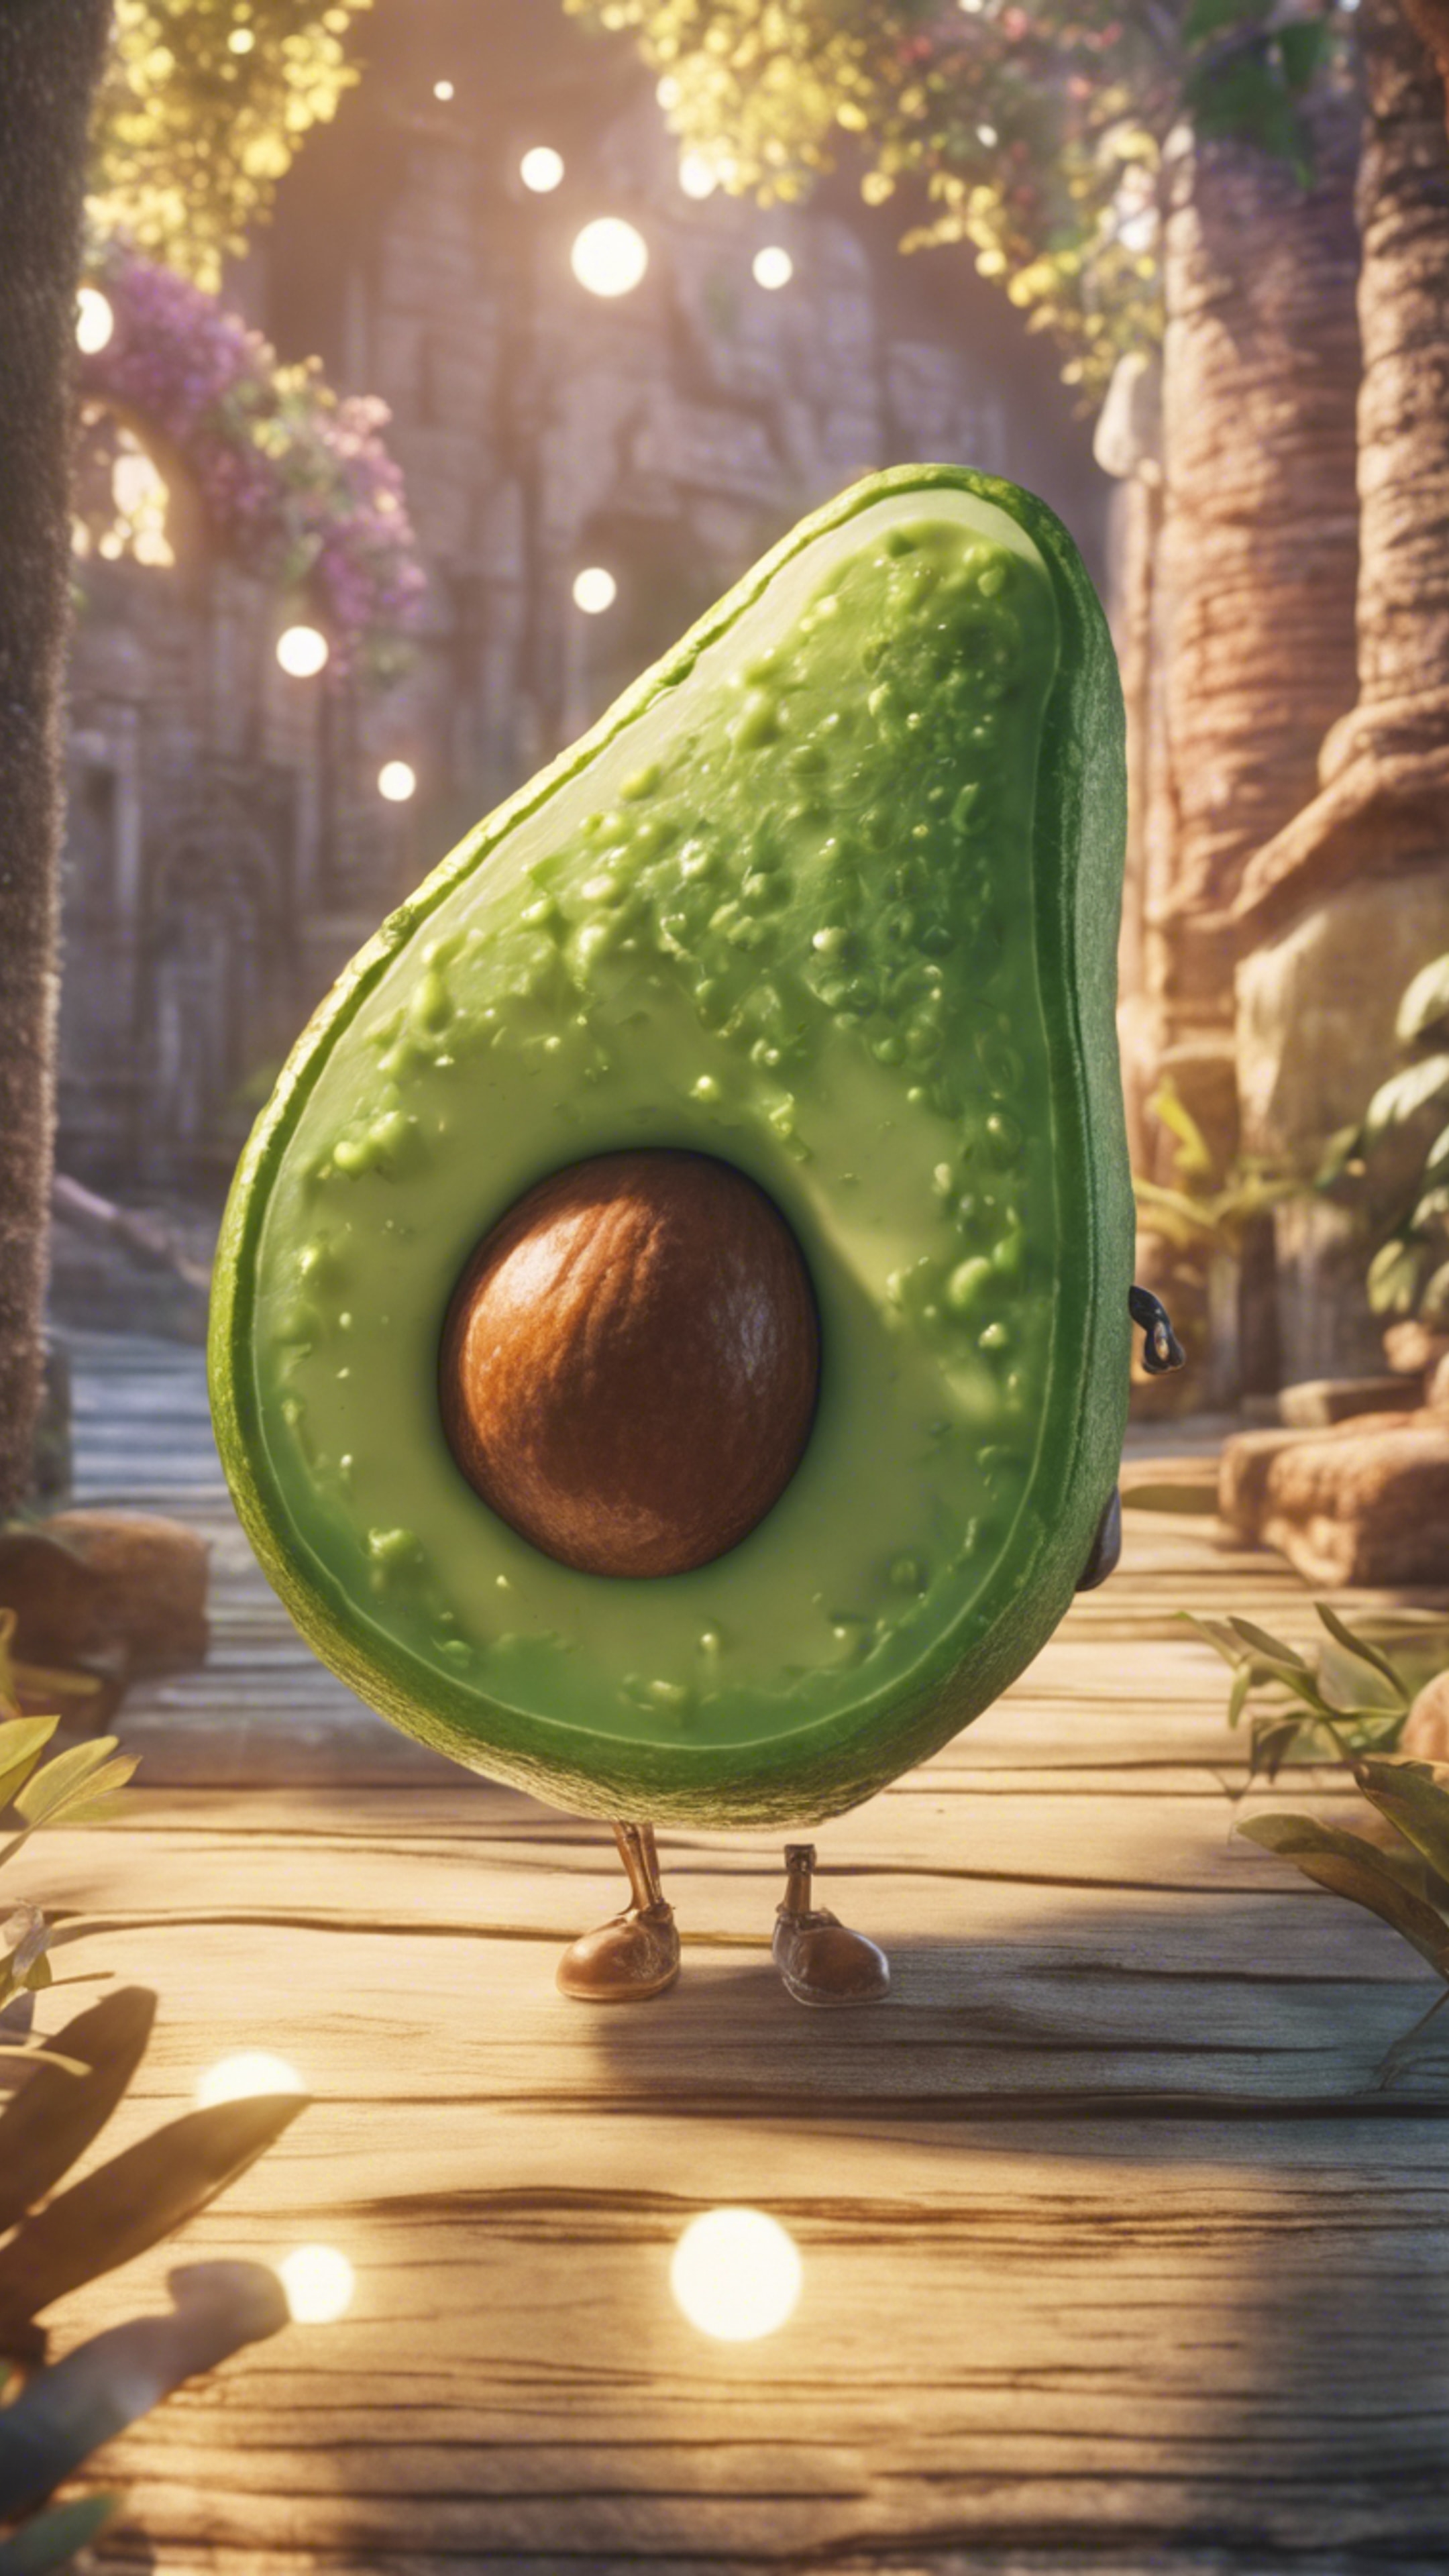 A manga-style scene of an avocado on a magical journey Ταπετσαρία[452ab1c8ad254f0b95e7]